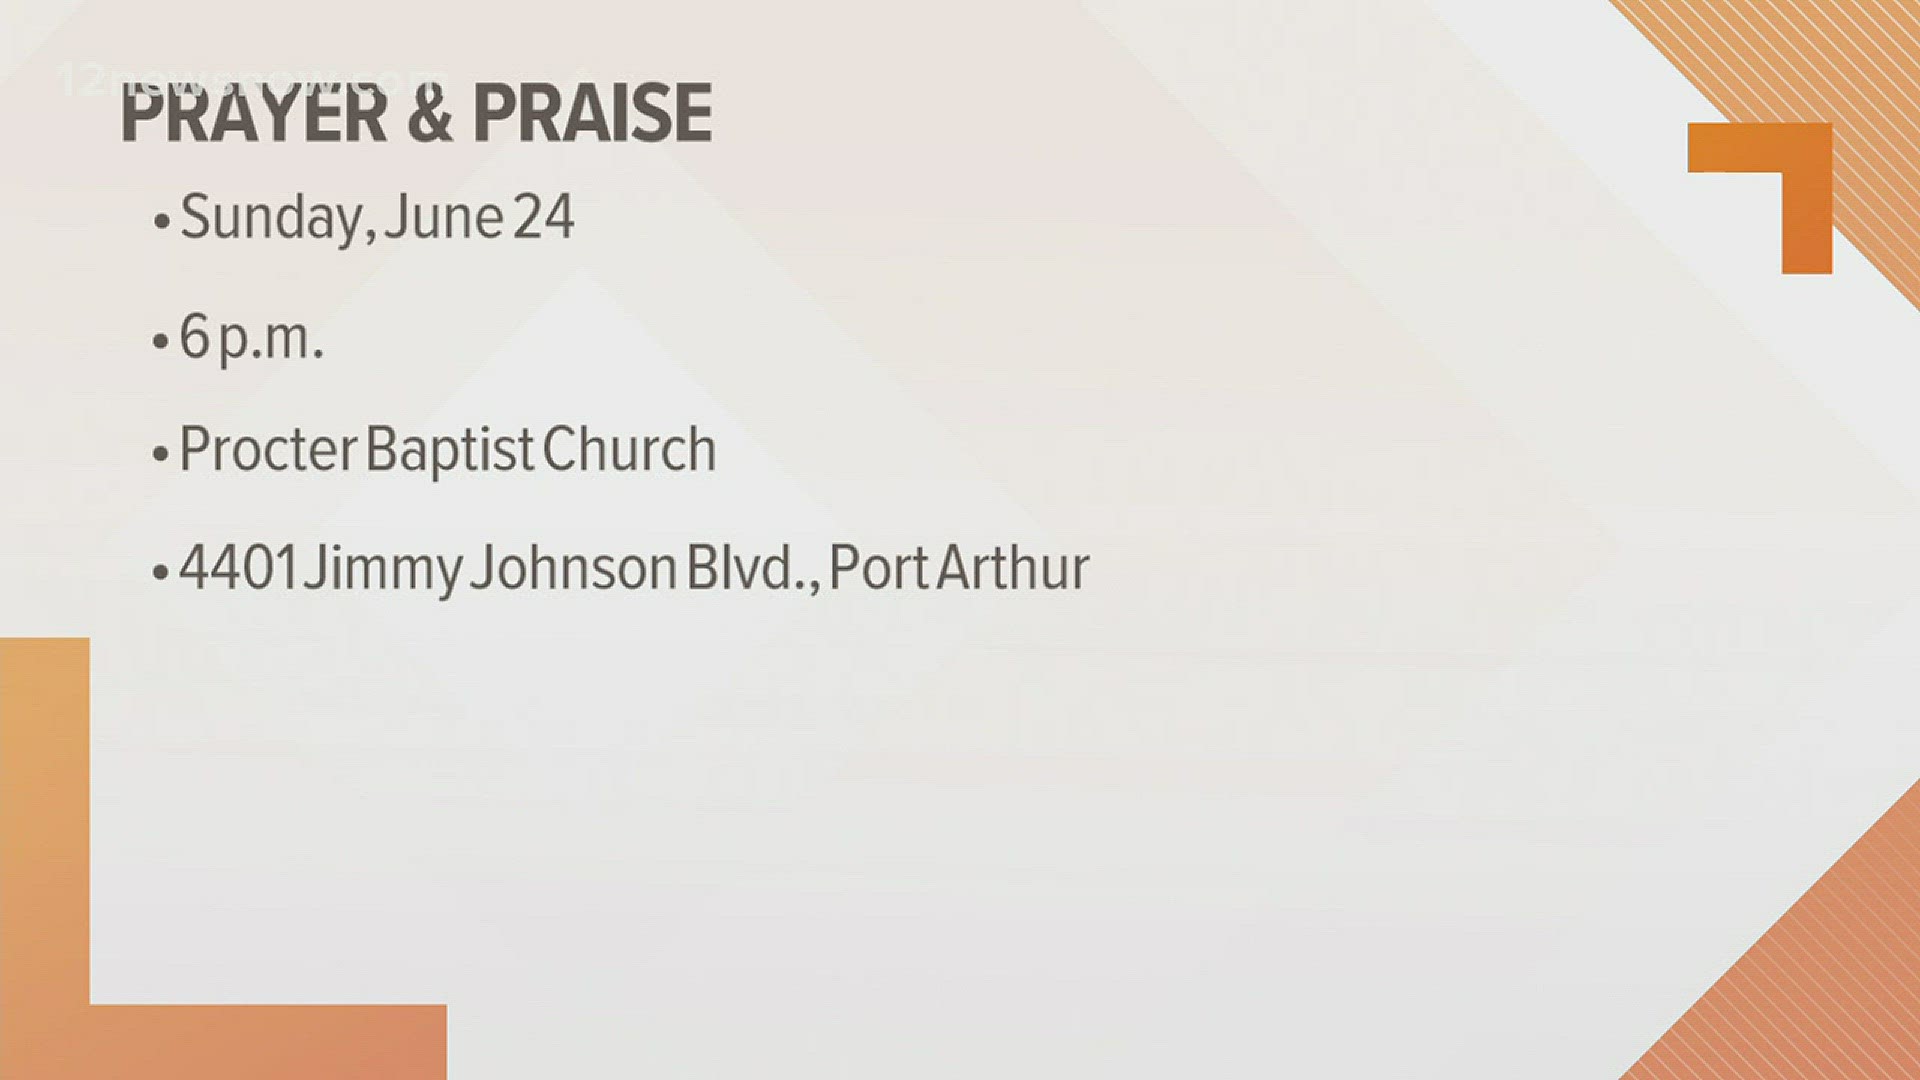 'Prayer & Praise' at a Port Arthur church on June 24